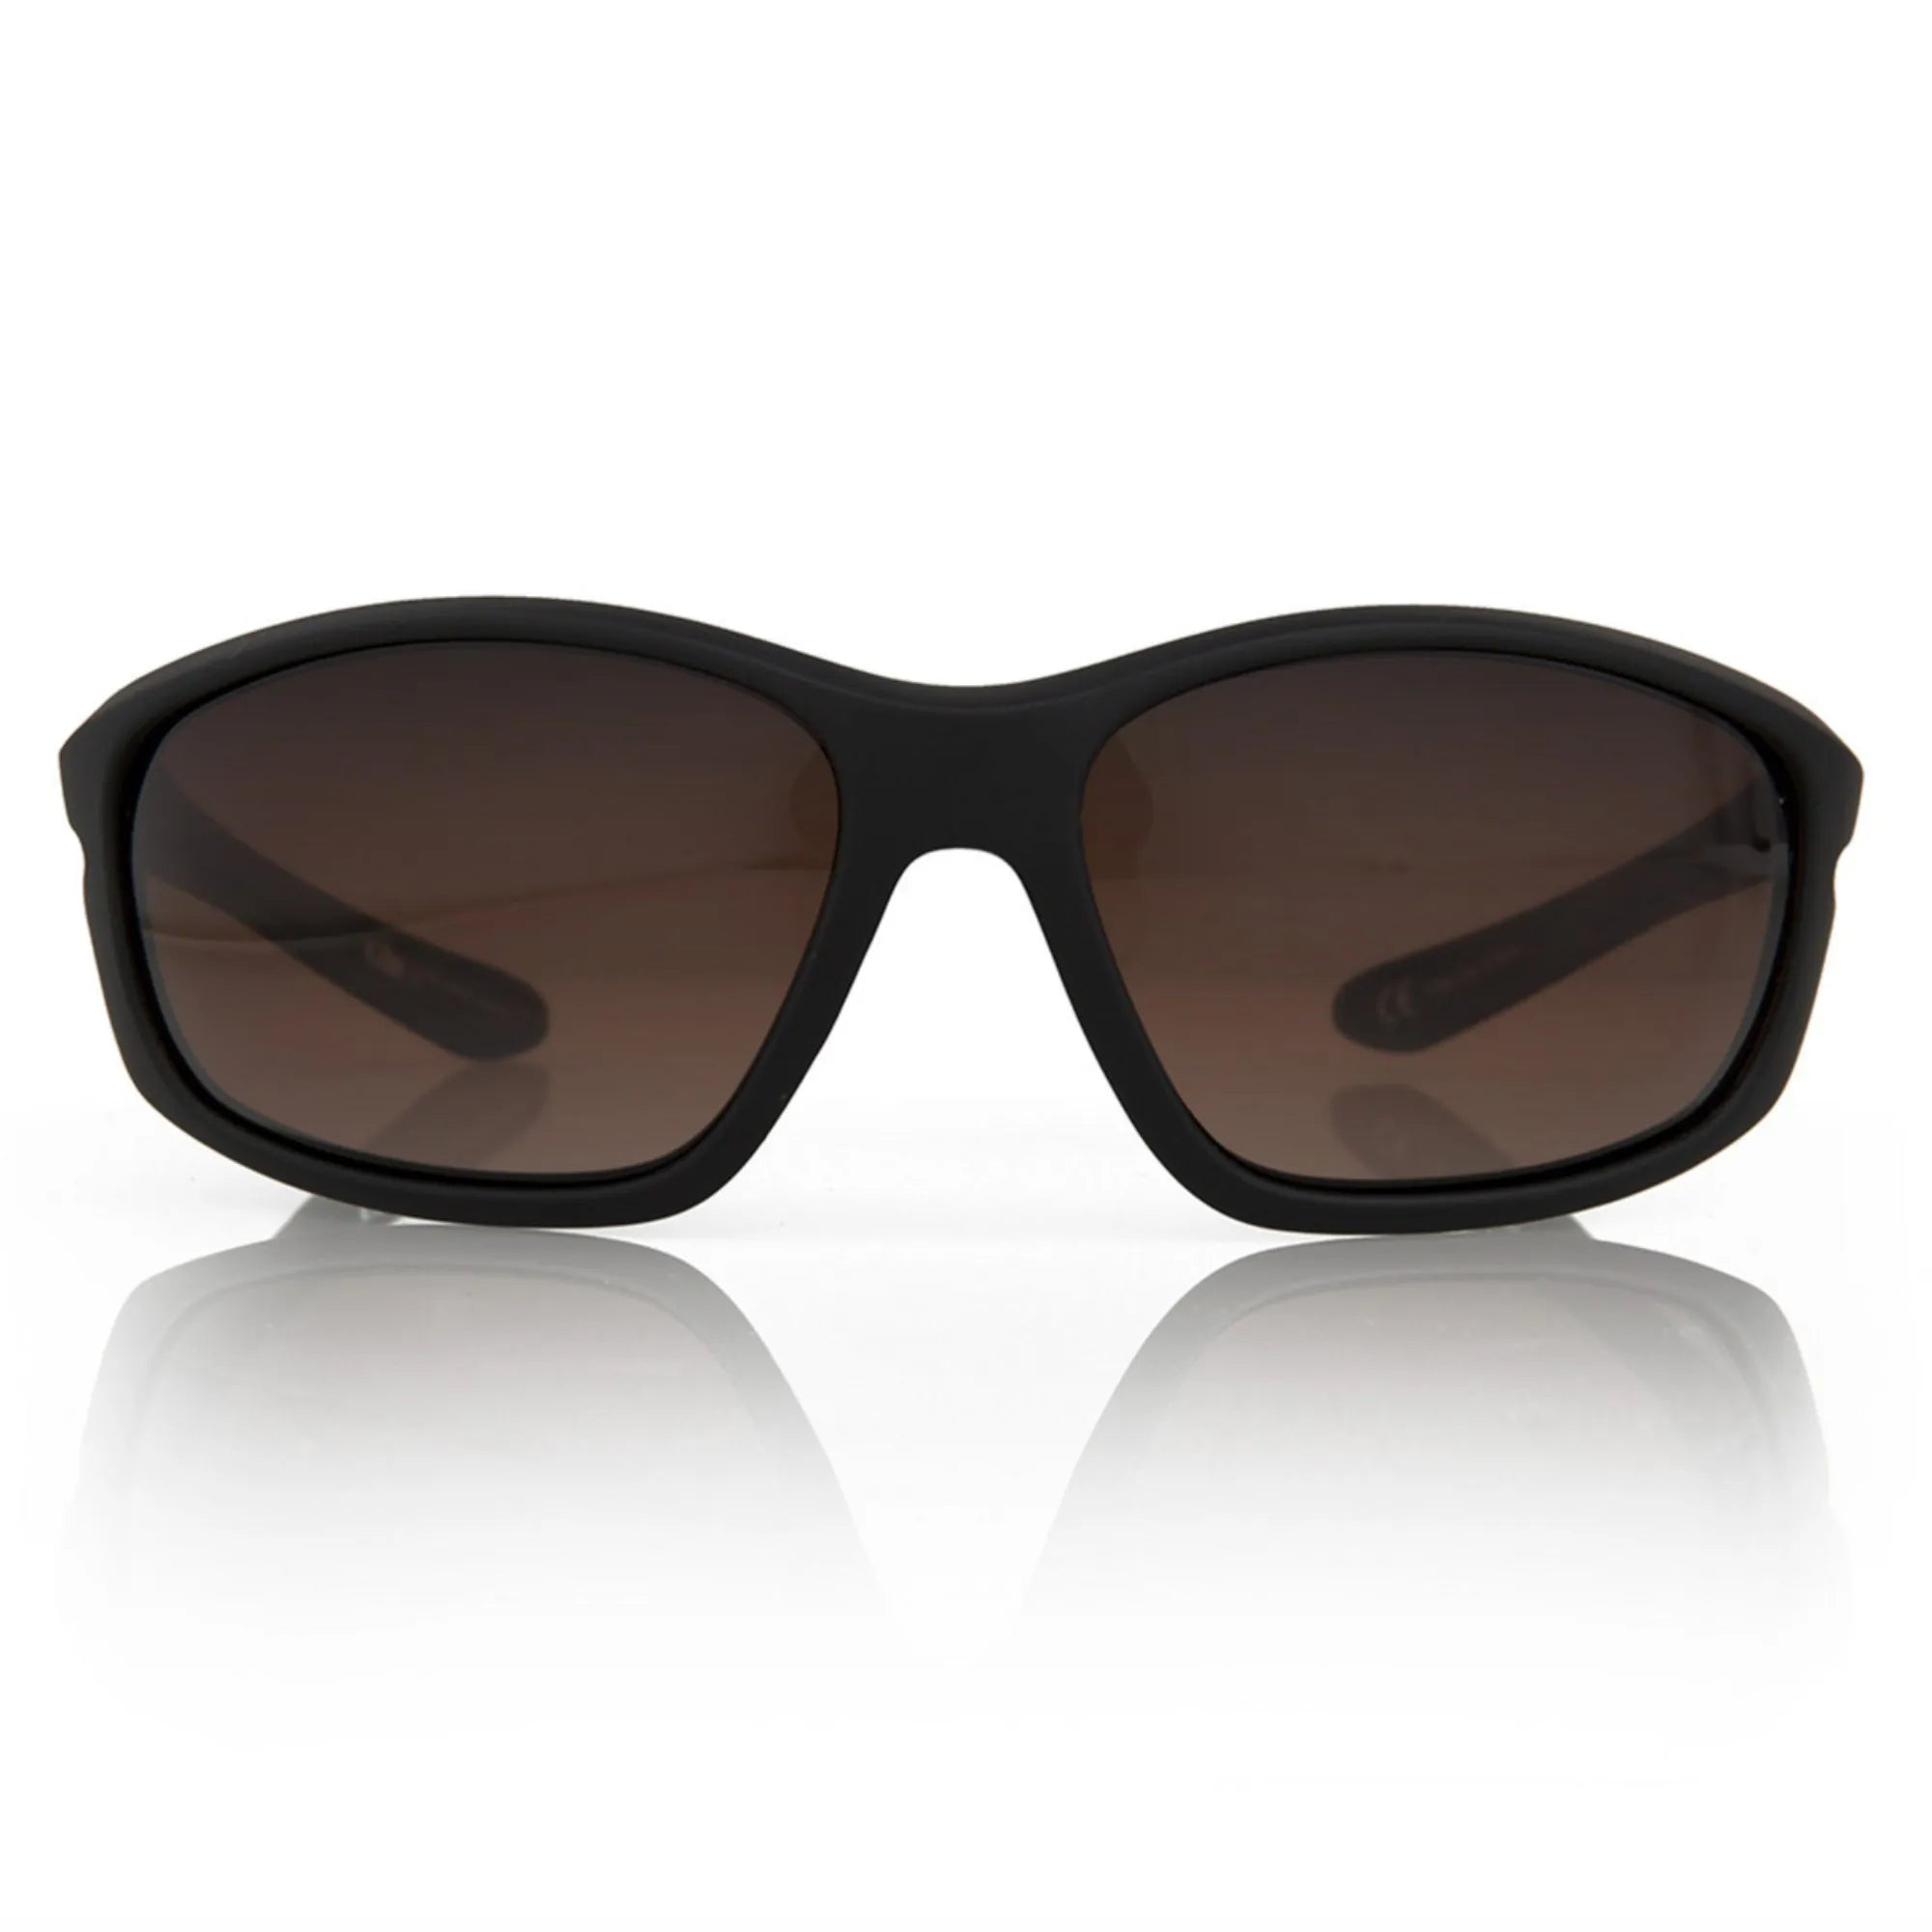 Corona Sunglasses - Black